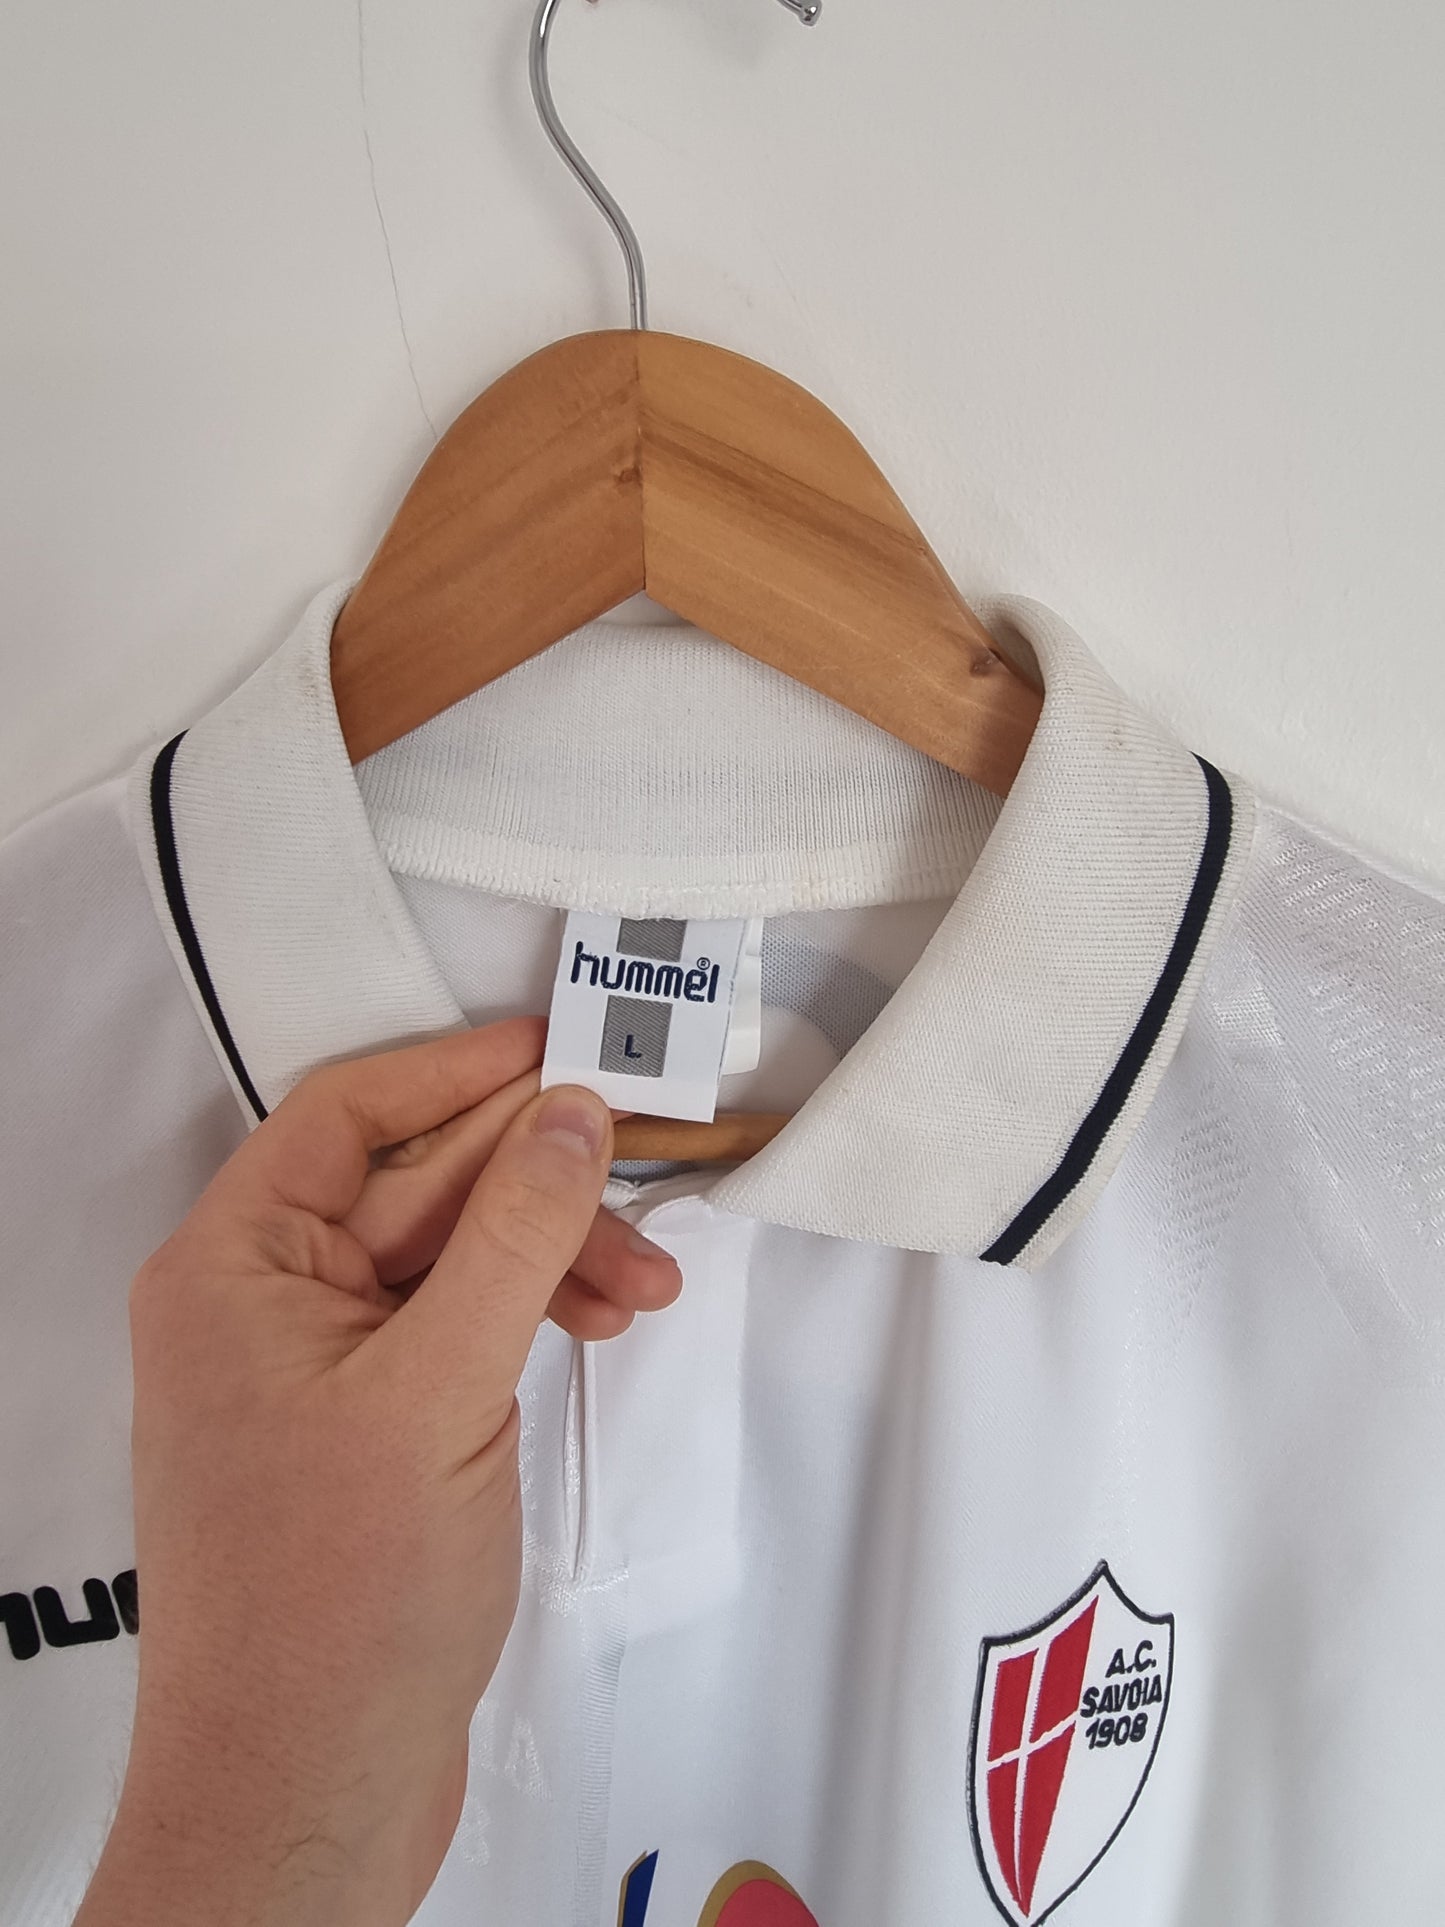 Hummel AC Savoia 99/00 'Poli 5' Match Issue Home Shirt Large